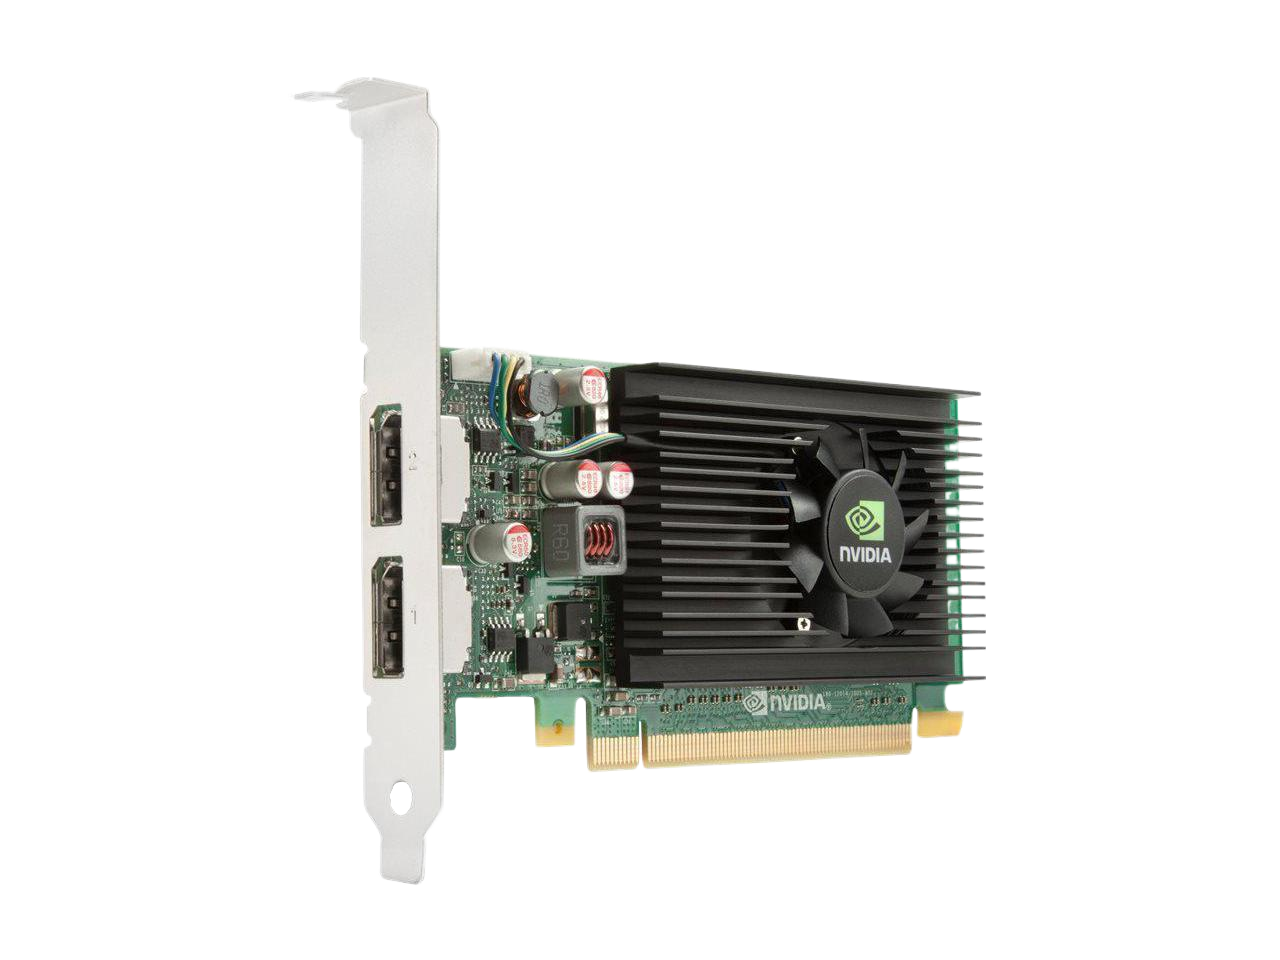 HP NVS Quadro NVS 310 A7U59AT 512MB DDR3 PCI Express 2.0 x16 Low Profile Graphics Card